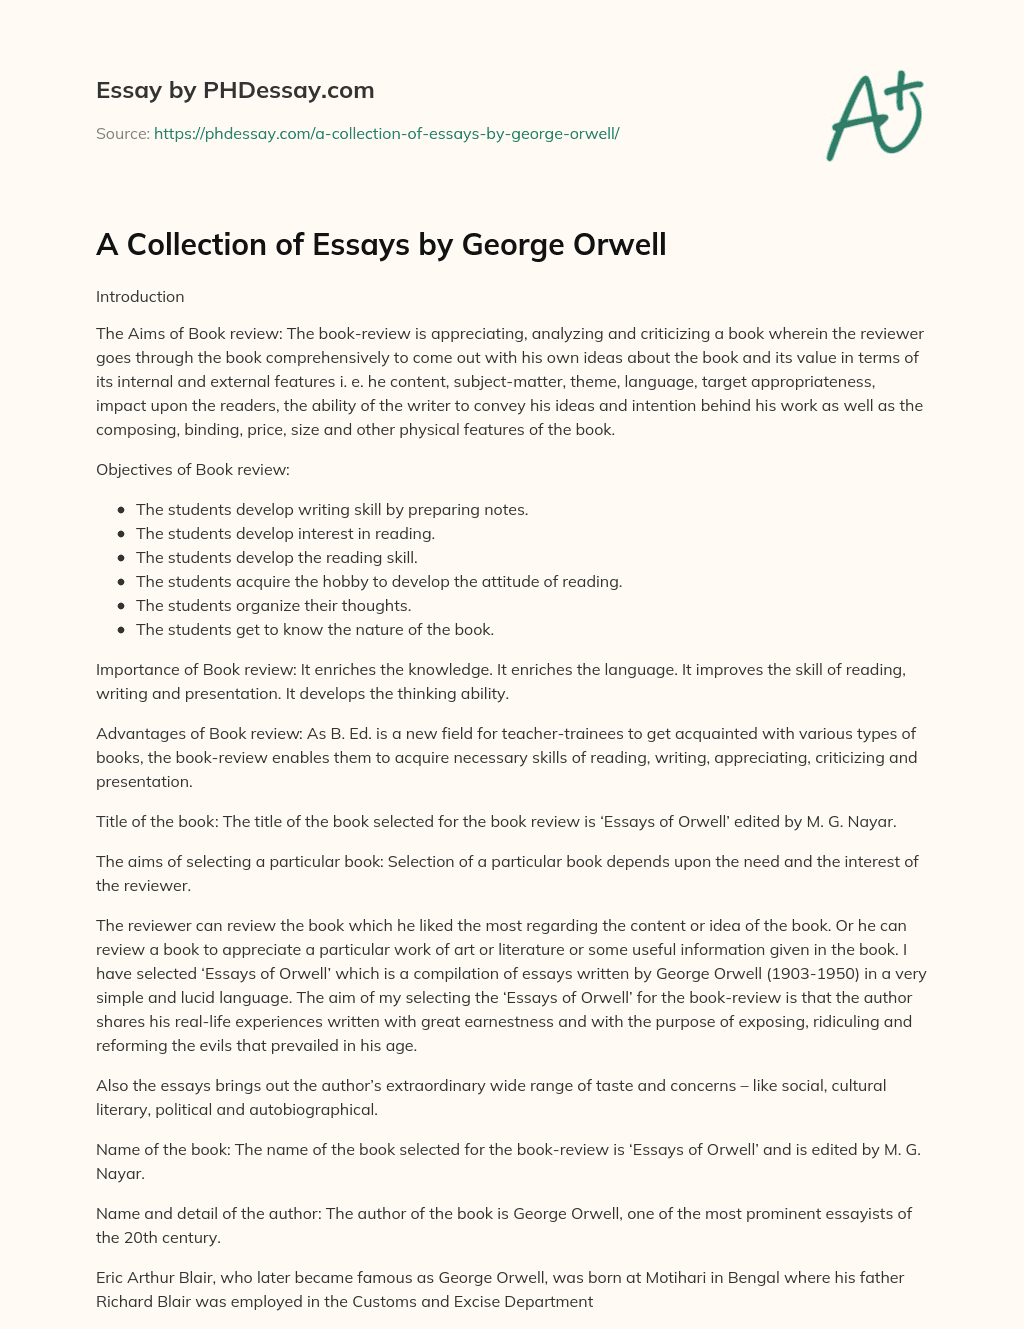 george orwell essay collection pdf